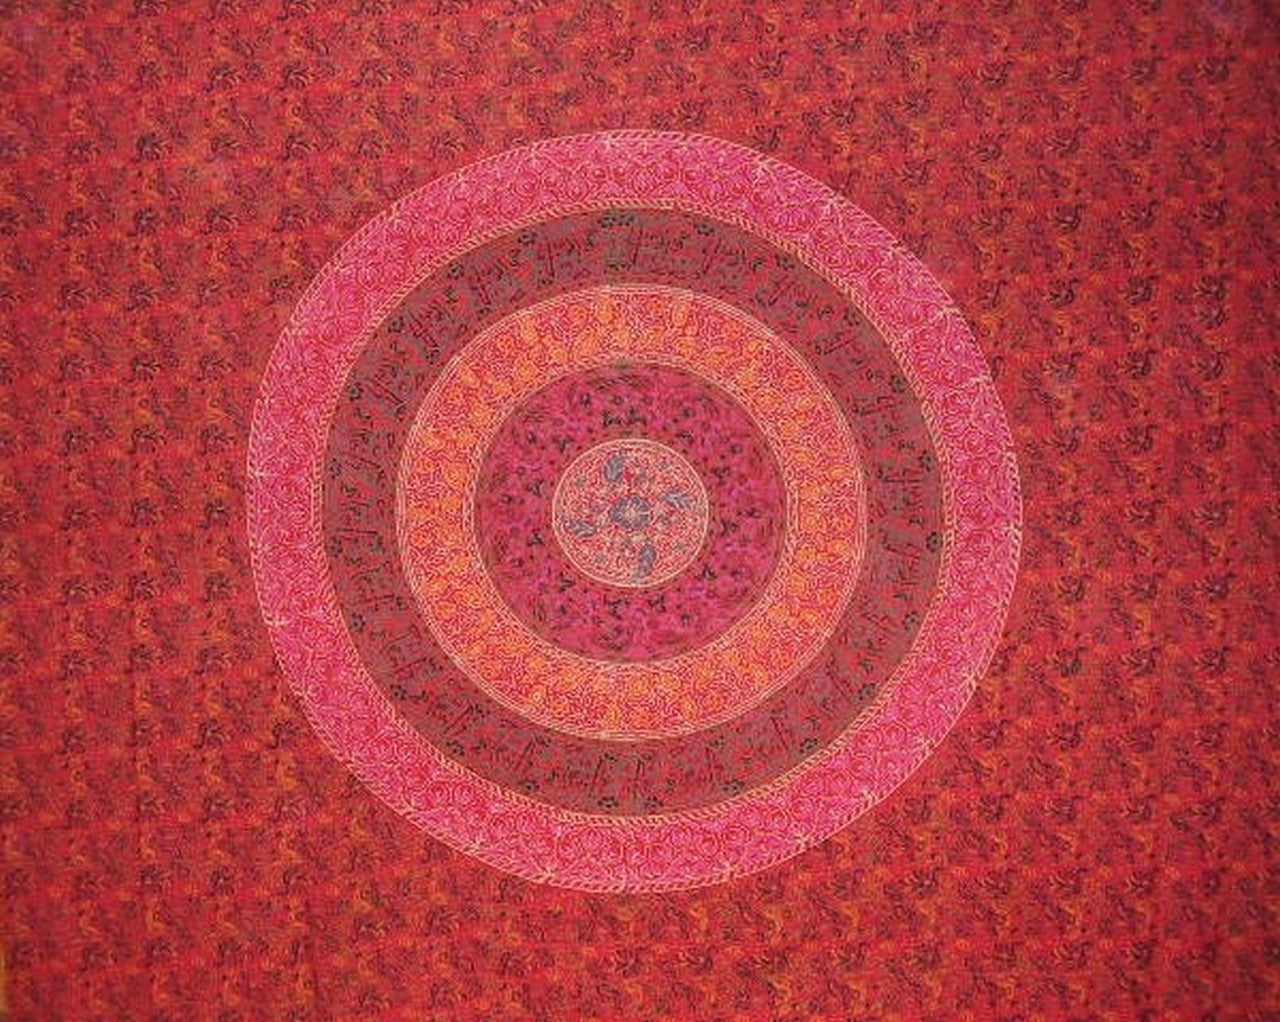 Sangananeer 印度挂毯棉质布 106 英寸 x 72 英寸双红色